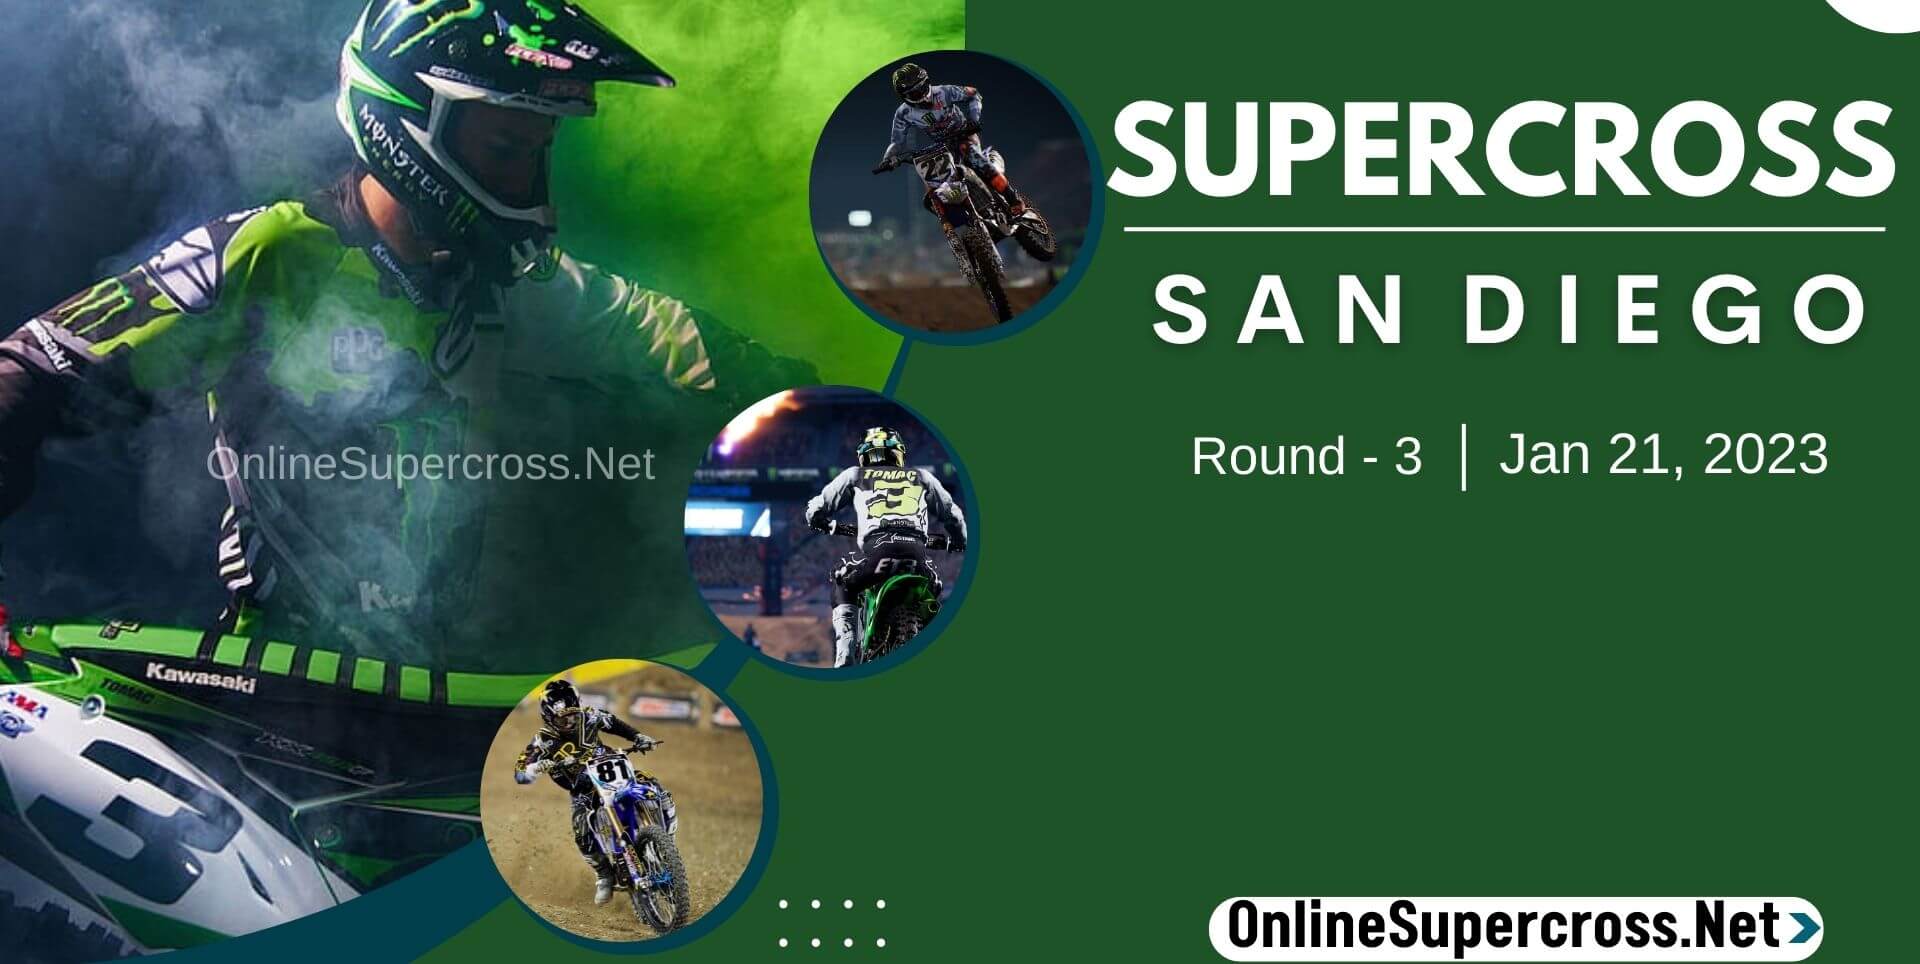 2019 Supercross San Diego Round 5